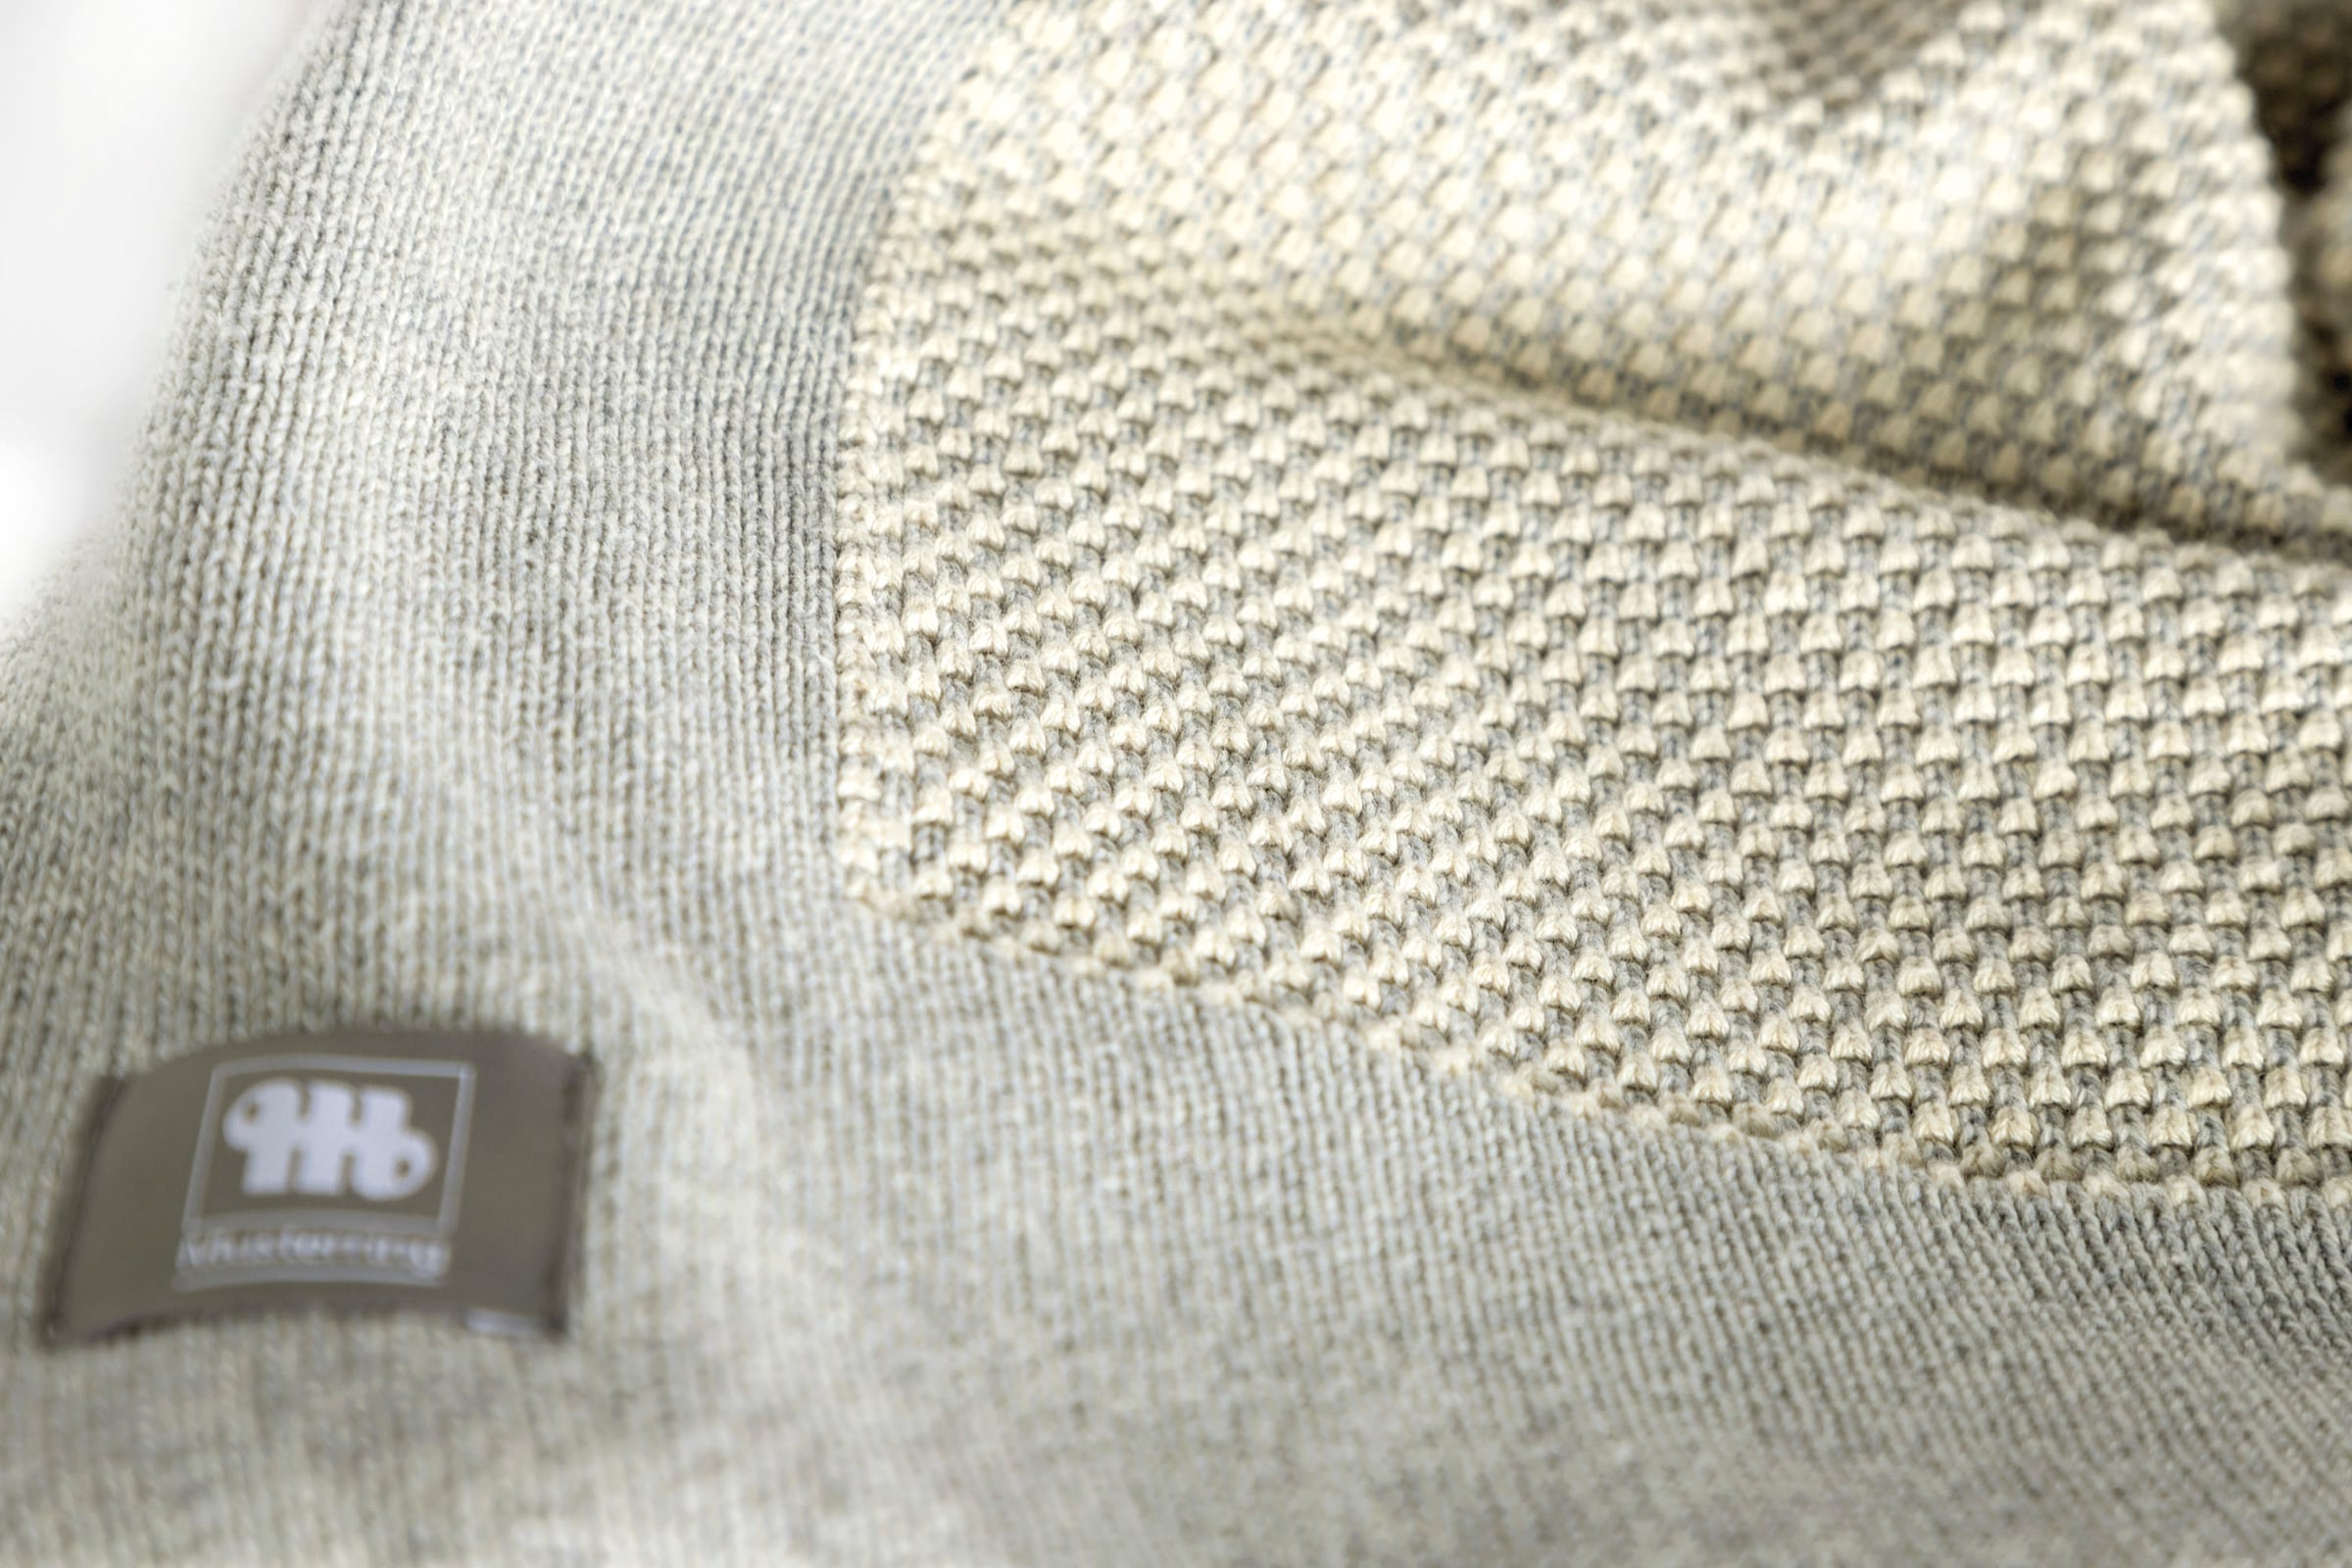 Musterring Plaid »Knit« kaufen bei OTTO